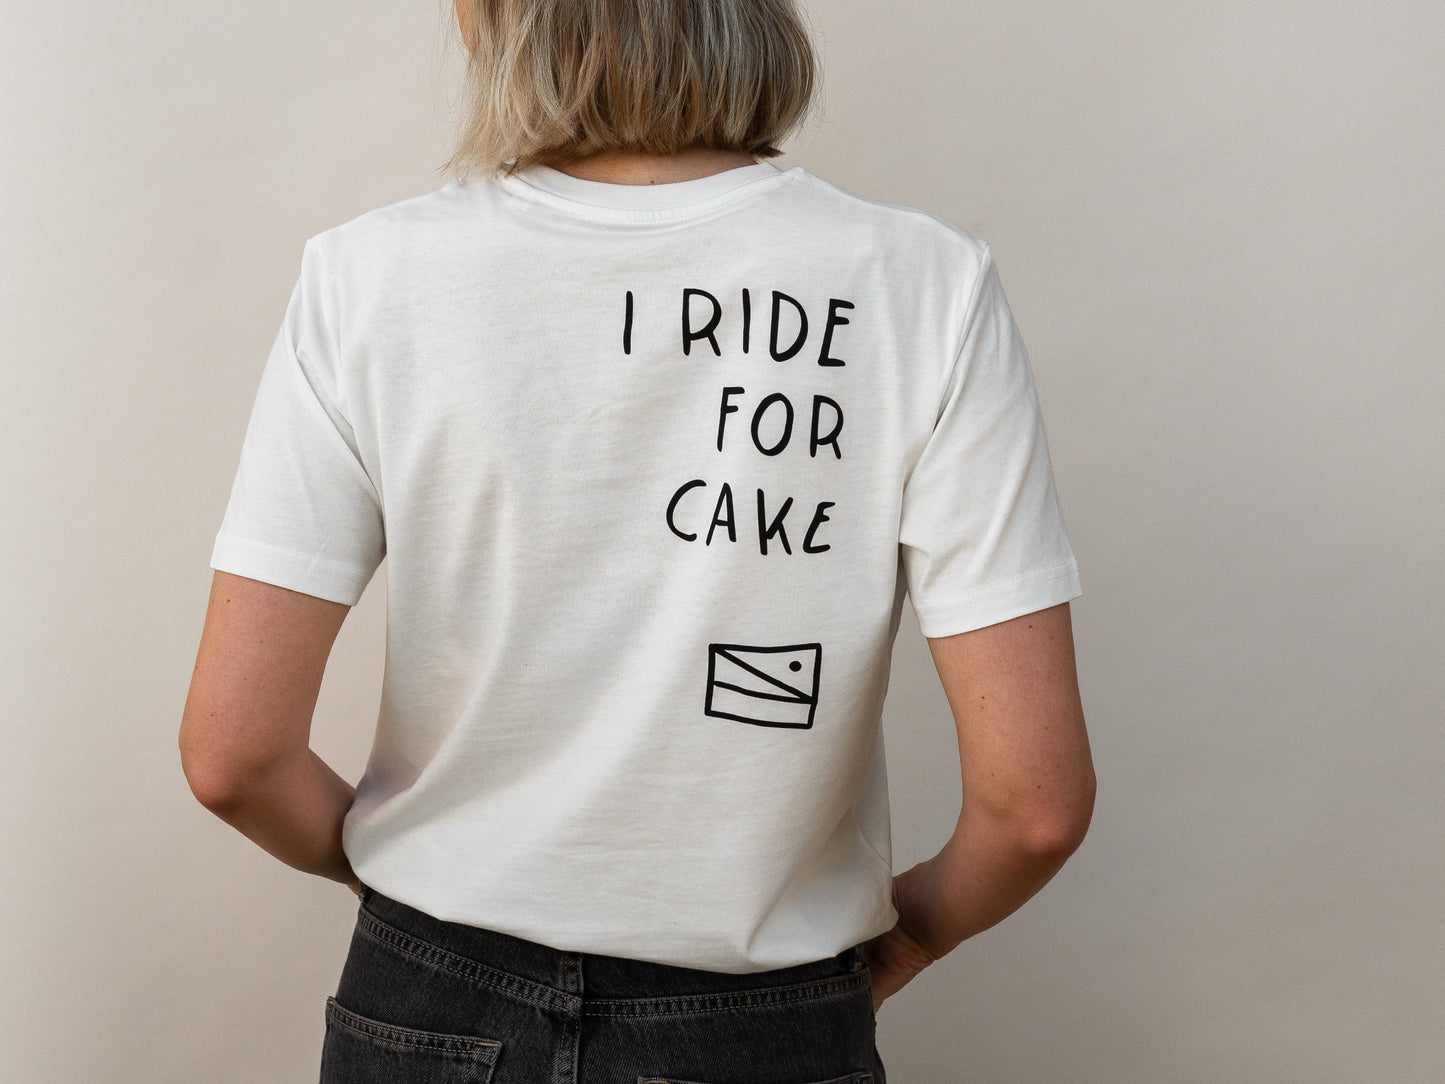 "I ride for cake" Unisex T-Shirt, White Sugar